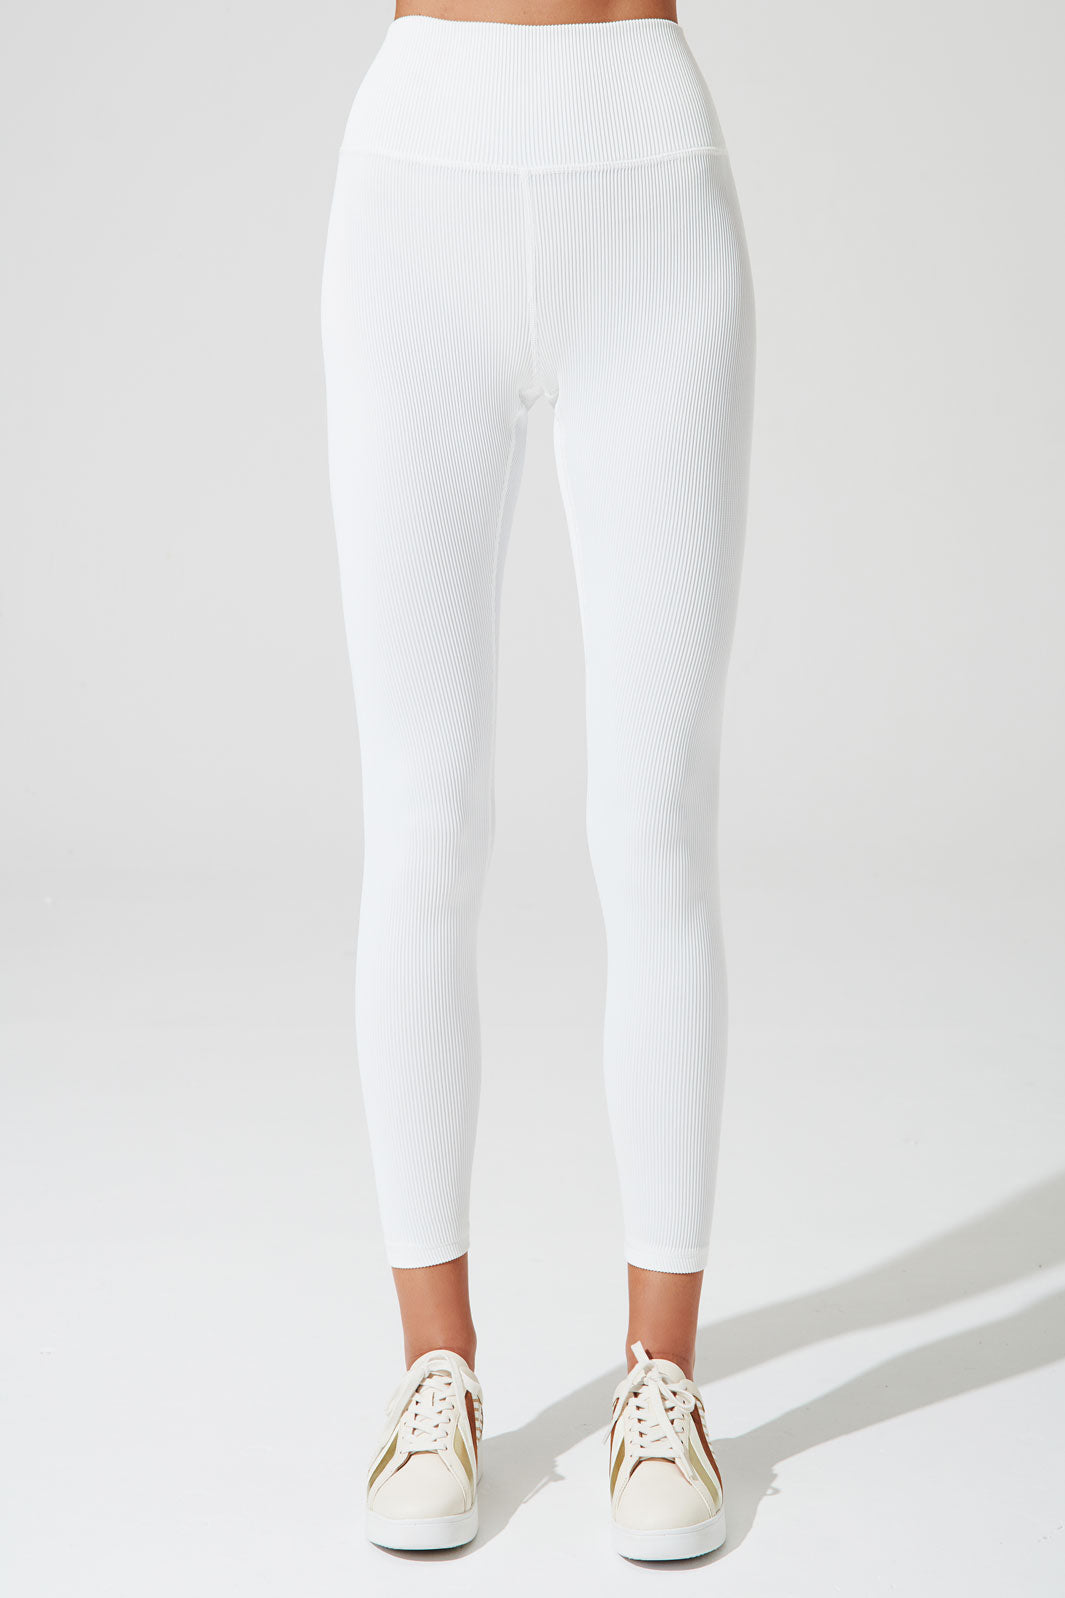 White high-waist ribbed leggings for women, stylish and comfortable - OW-0127-WLG-WT_1.jpg